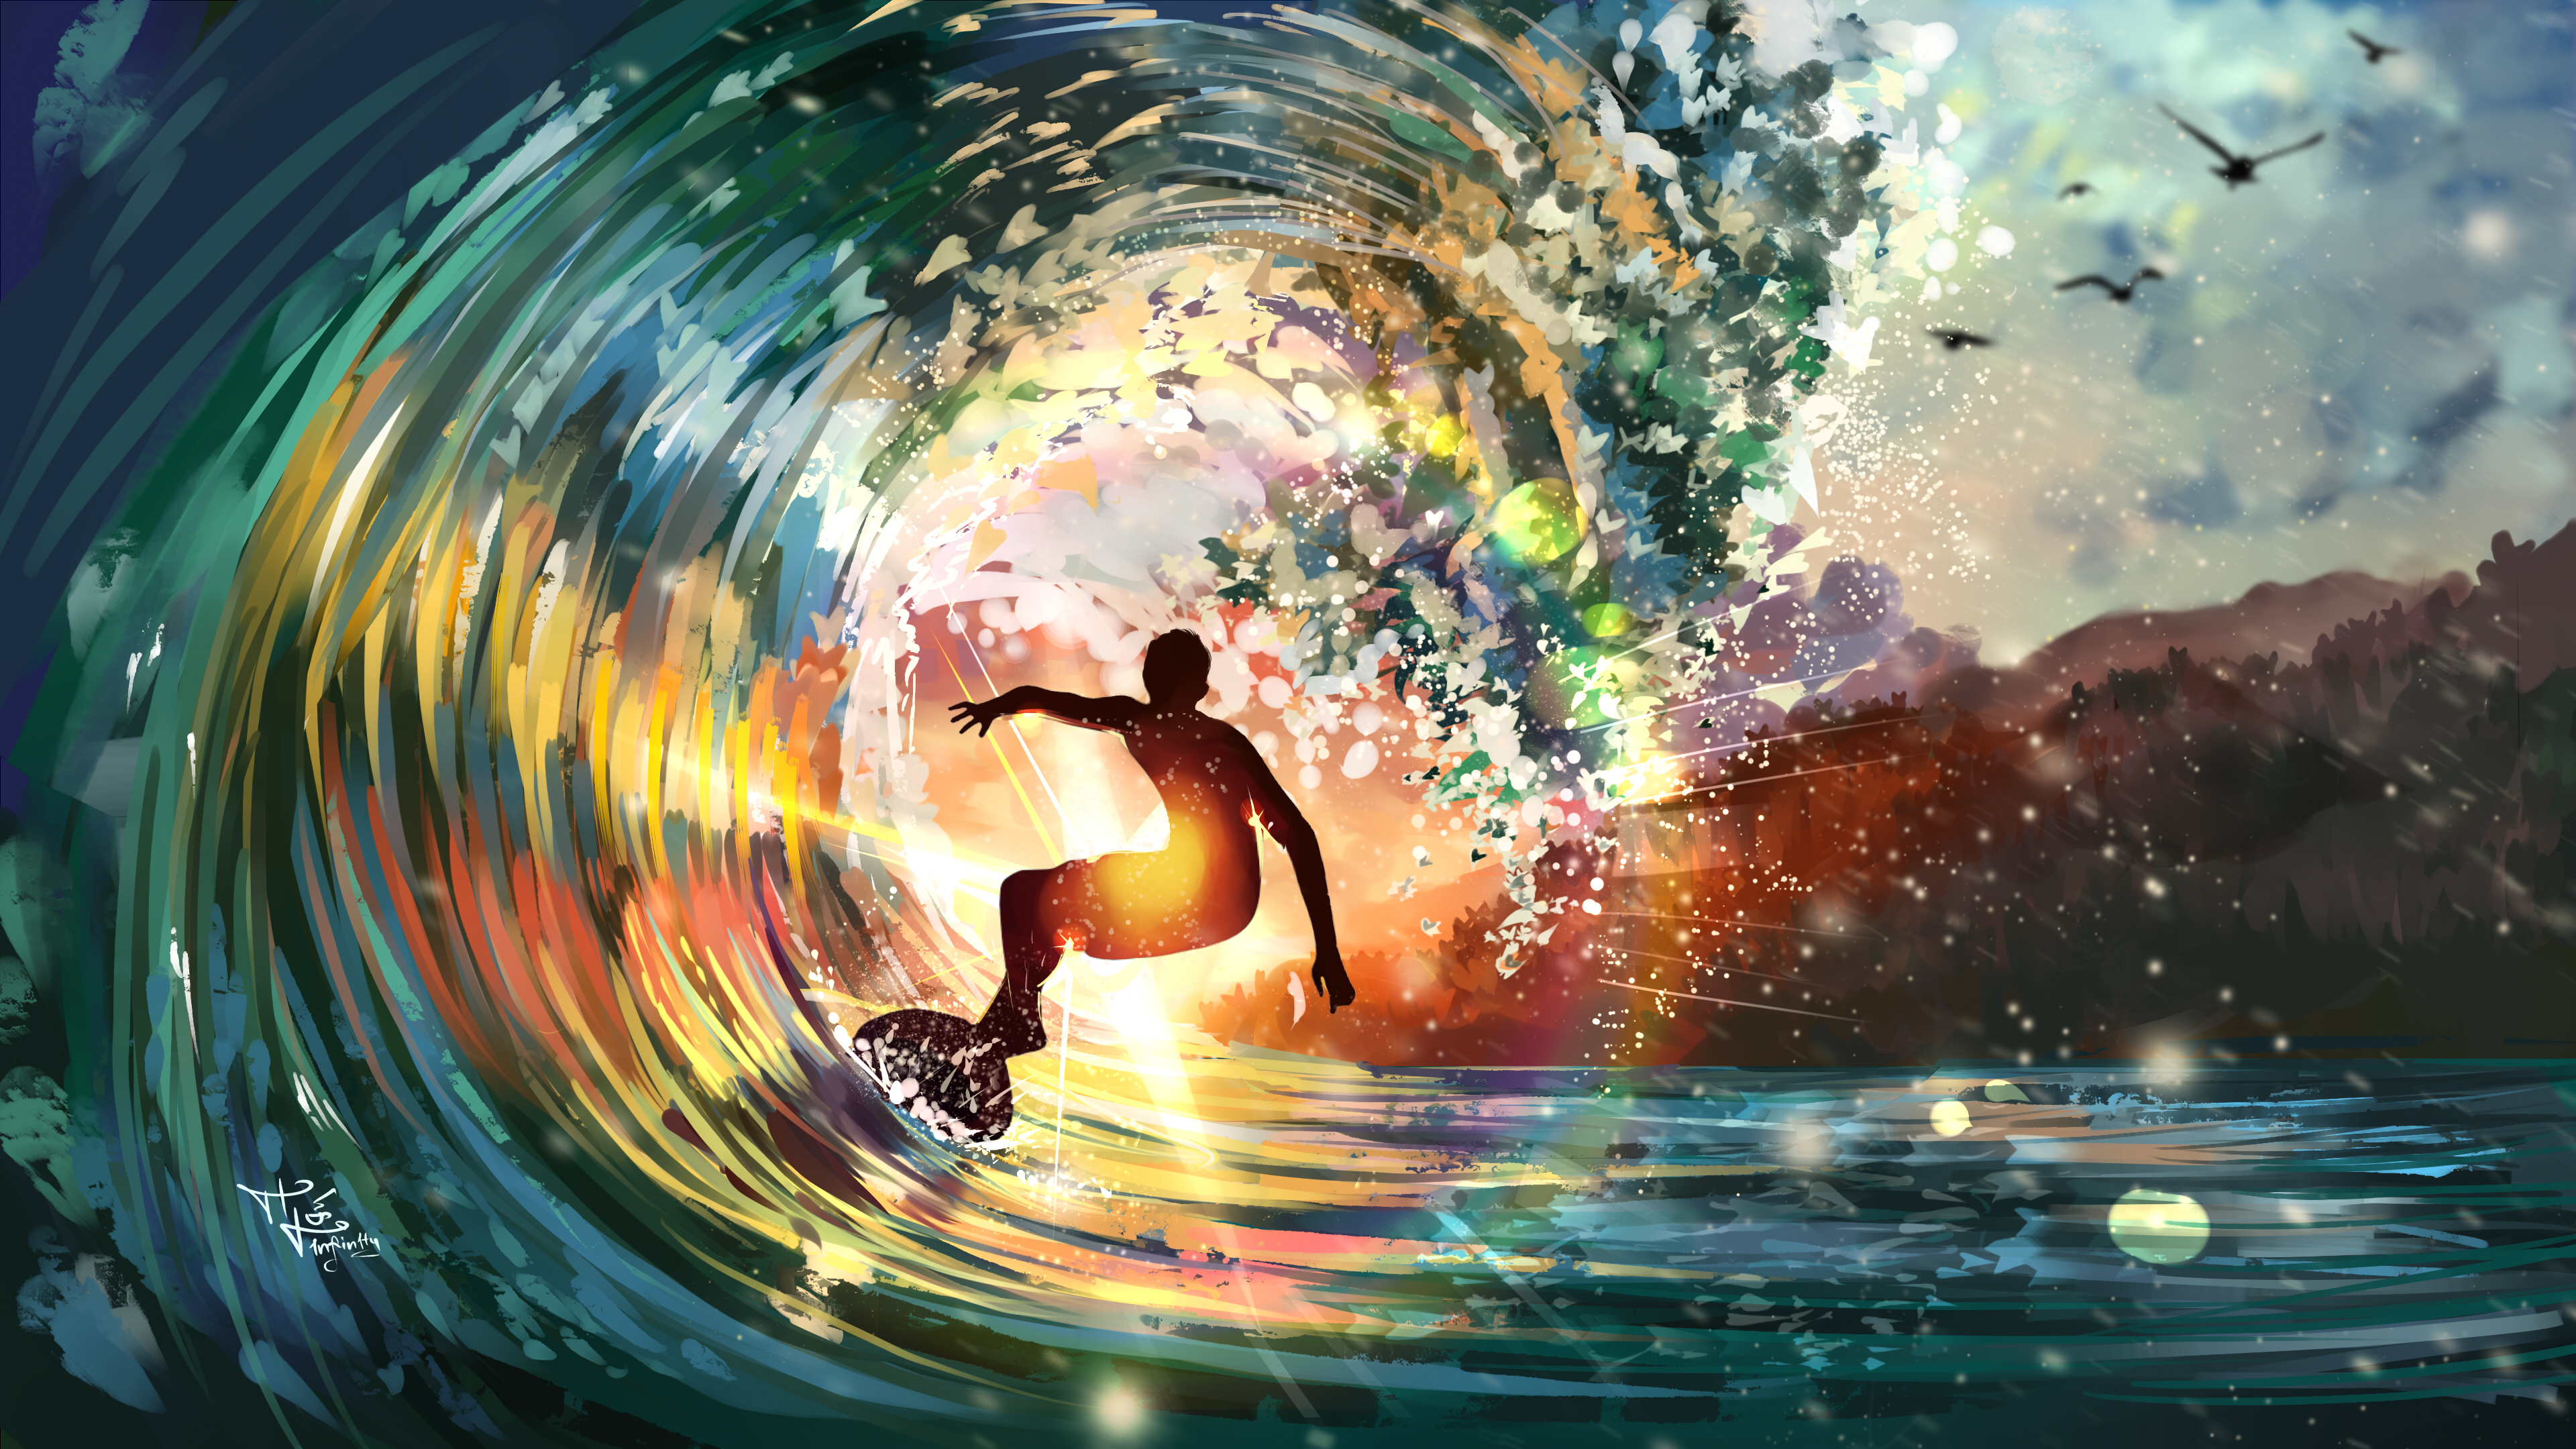 Digital Digital Art Artwork Illustration Drawing Digital Painting Surfers Surfing Waves Nature Sun S 3840x2160